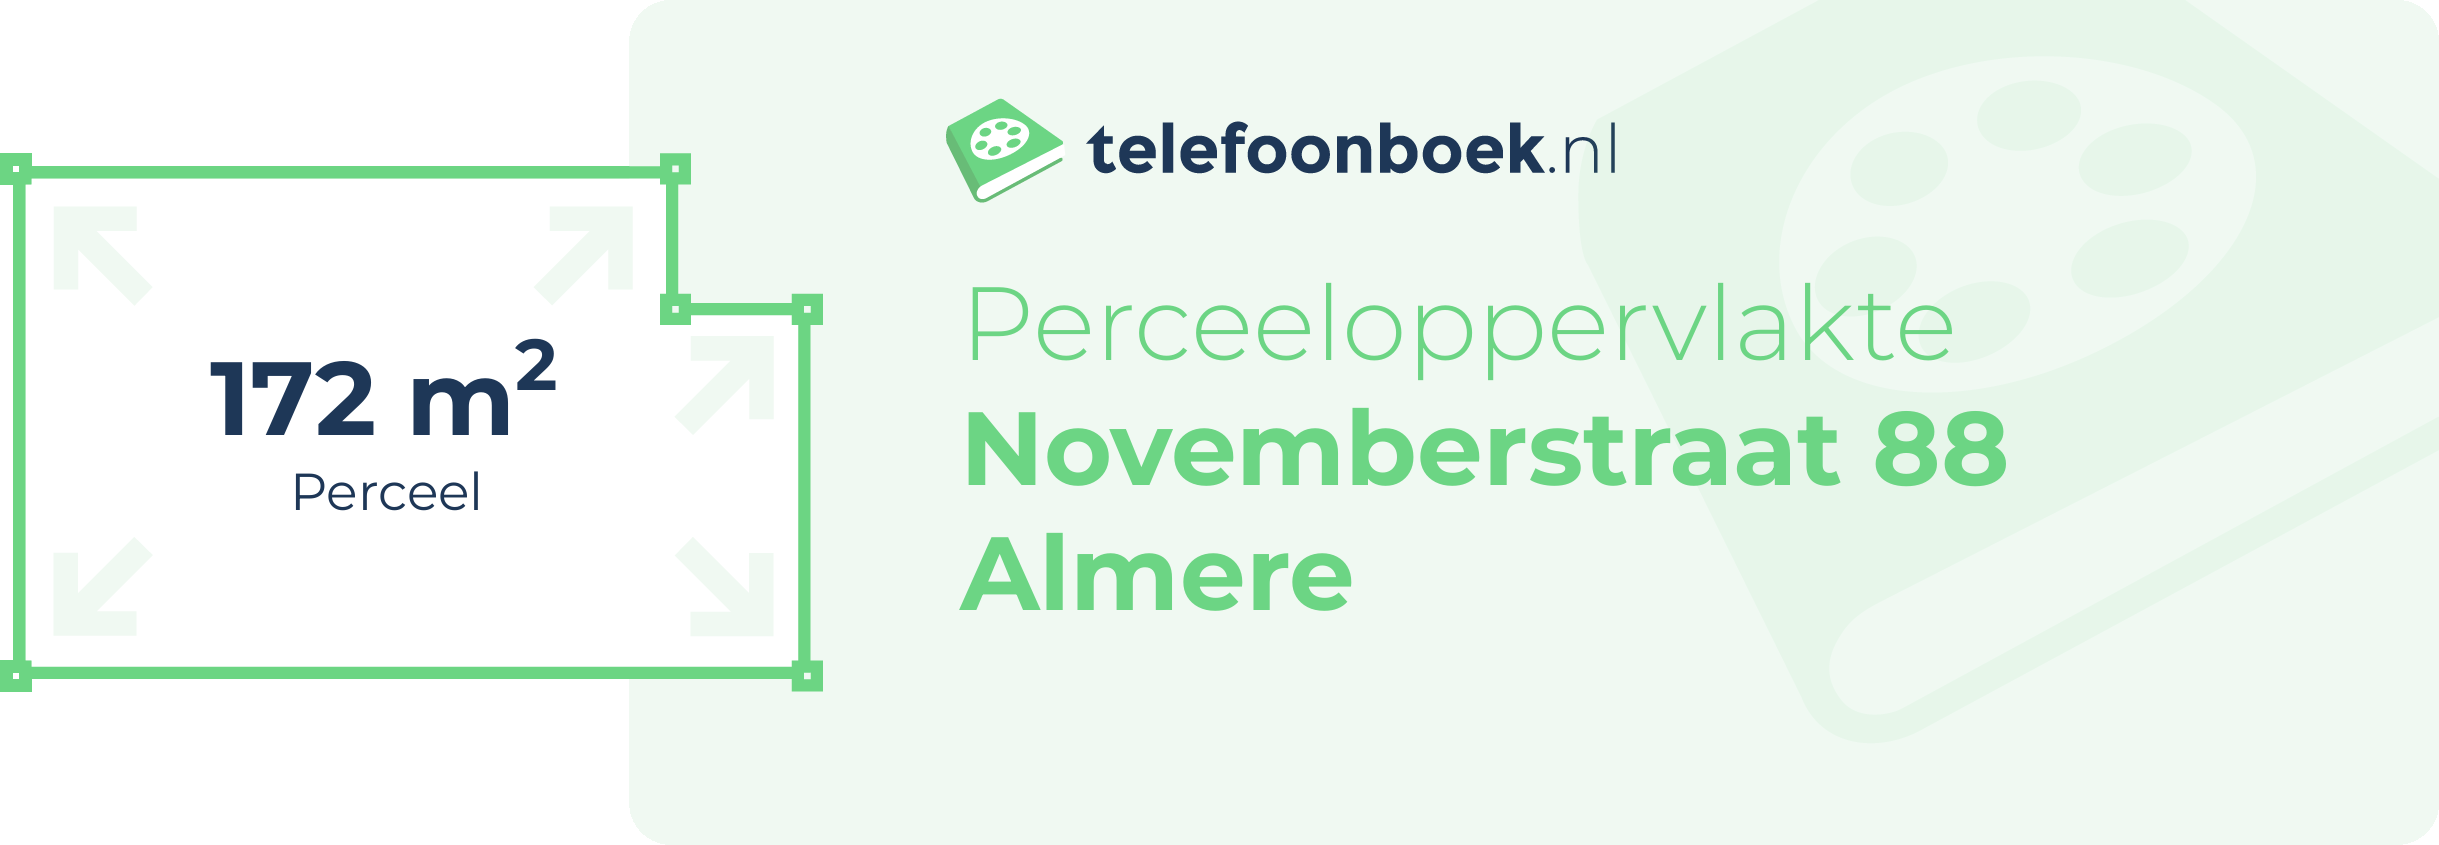 Perceeloppervlakte Novemberstraat 88 Almere